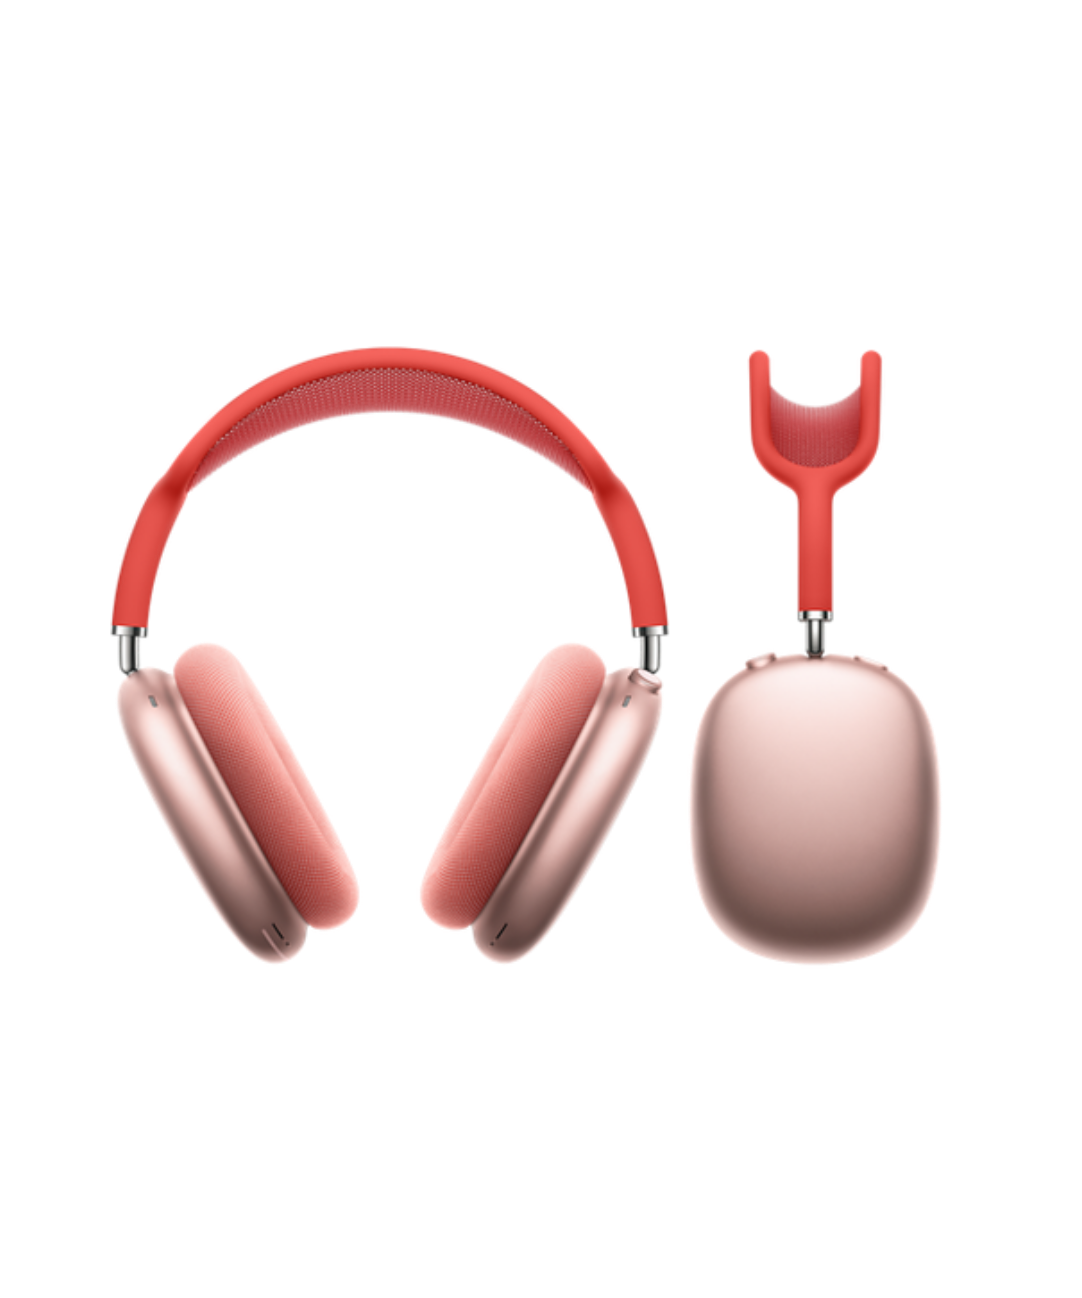 Apple airpod max headphones in orange.